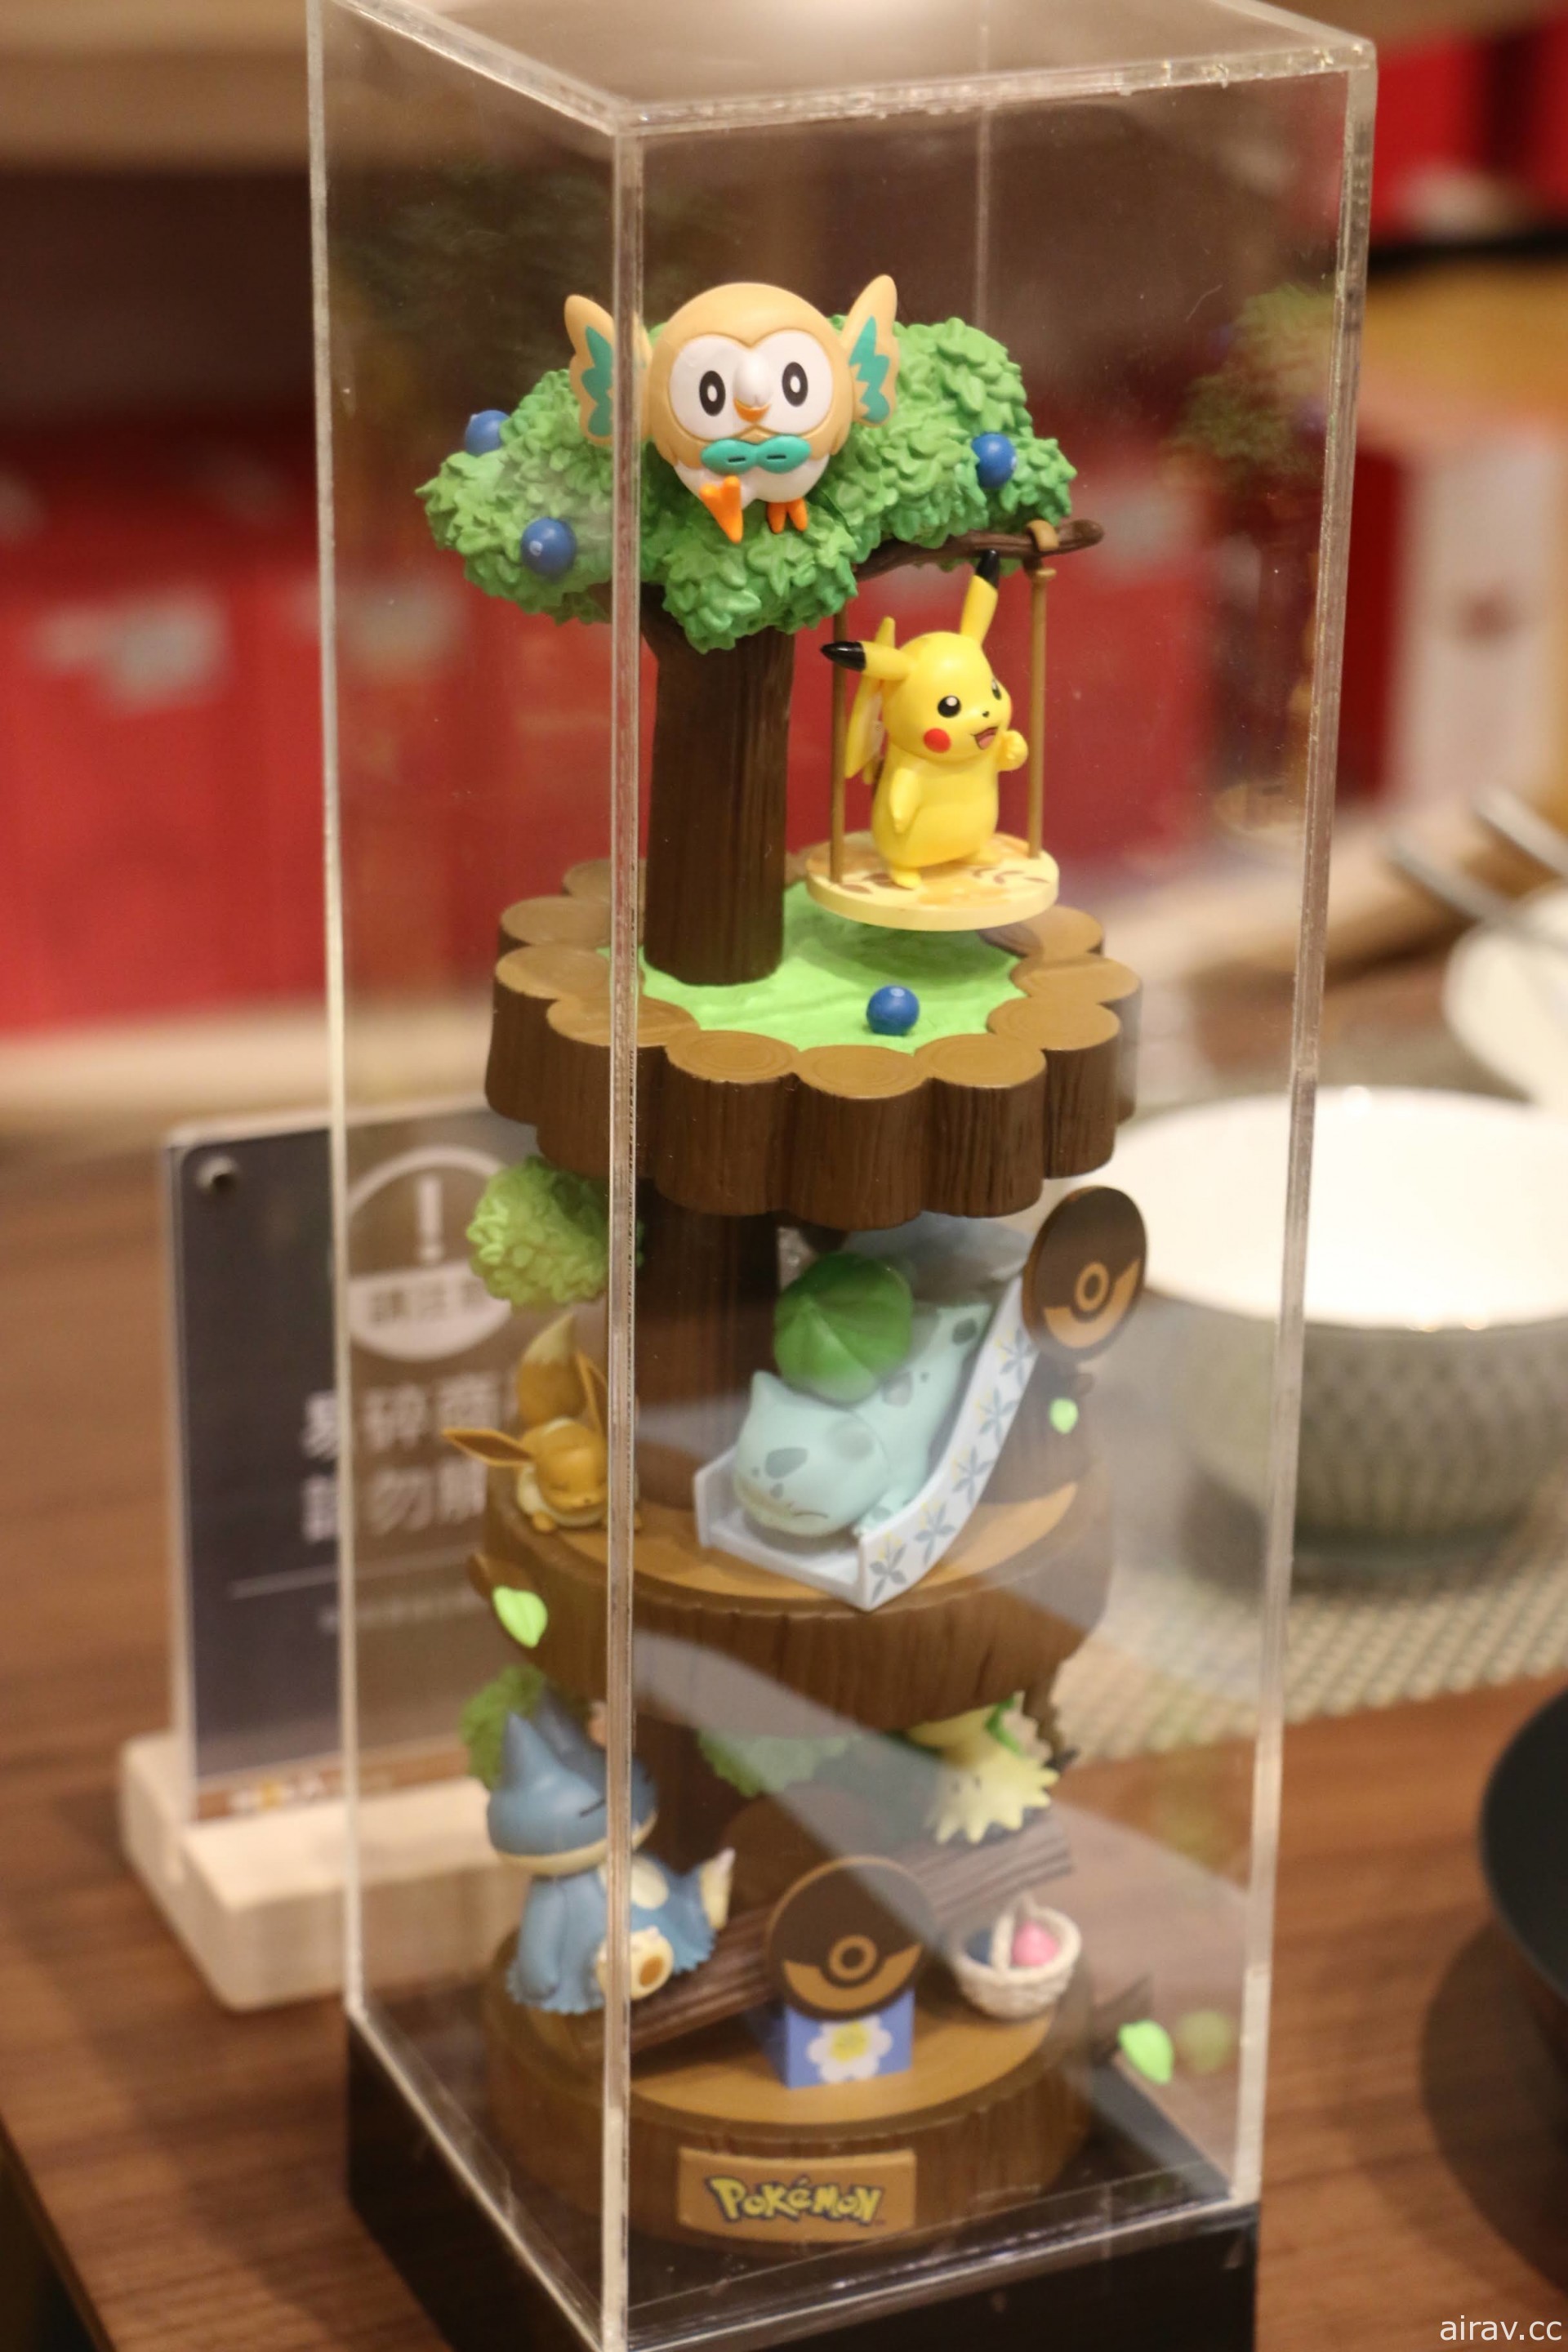 HOLA 推出「寶可夢商品 2.0」居家單品 週週皆有《Pokemon GO》頭目寶可夢現身